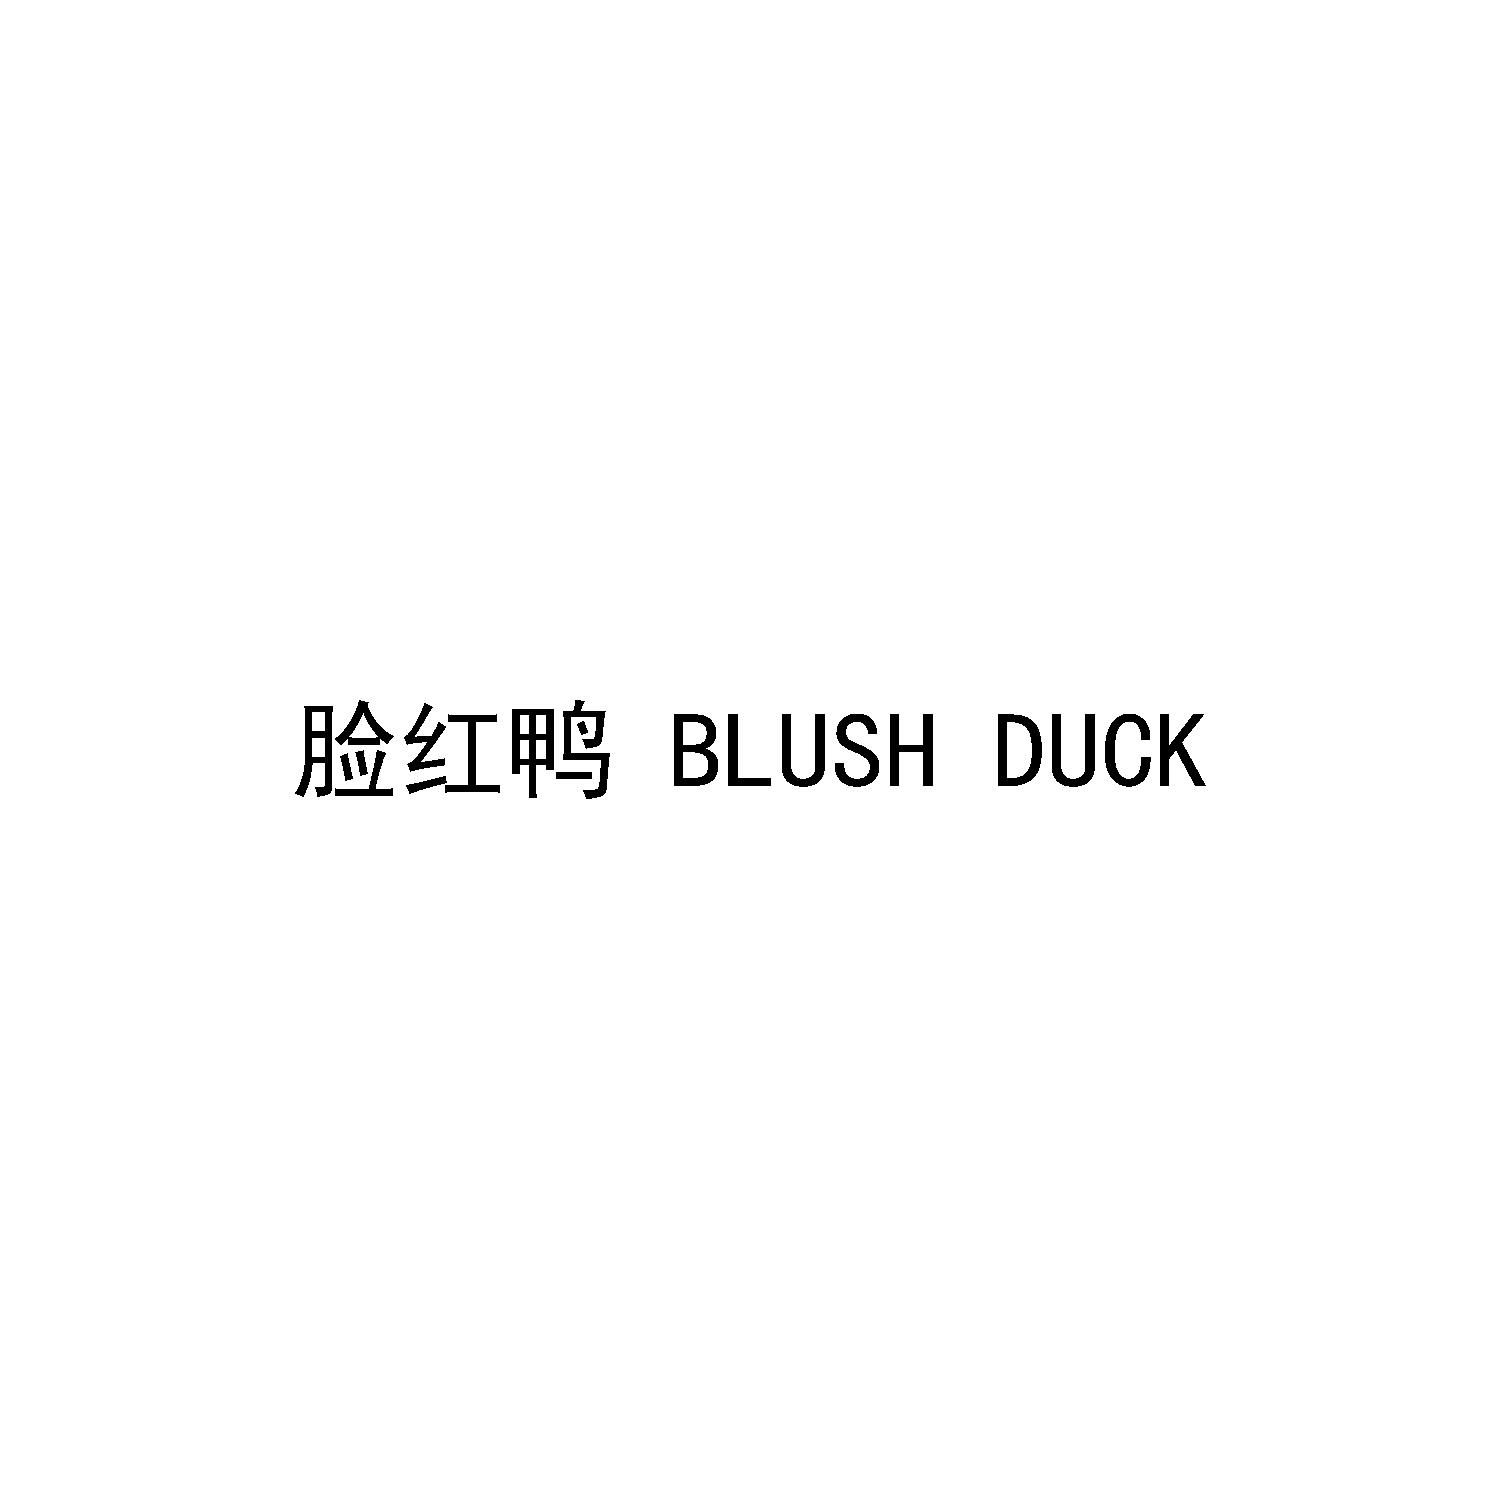 脸红鸭 Blush Duck